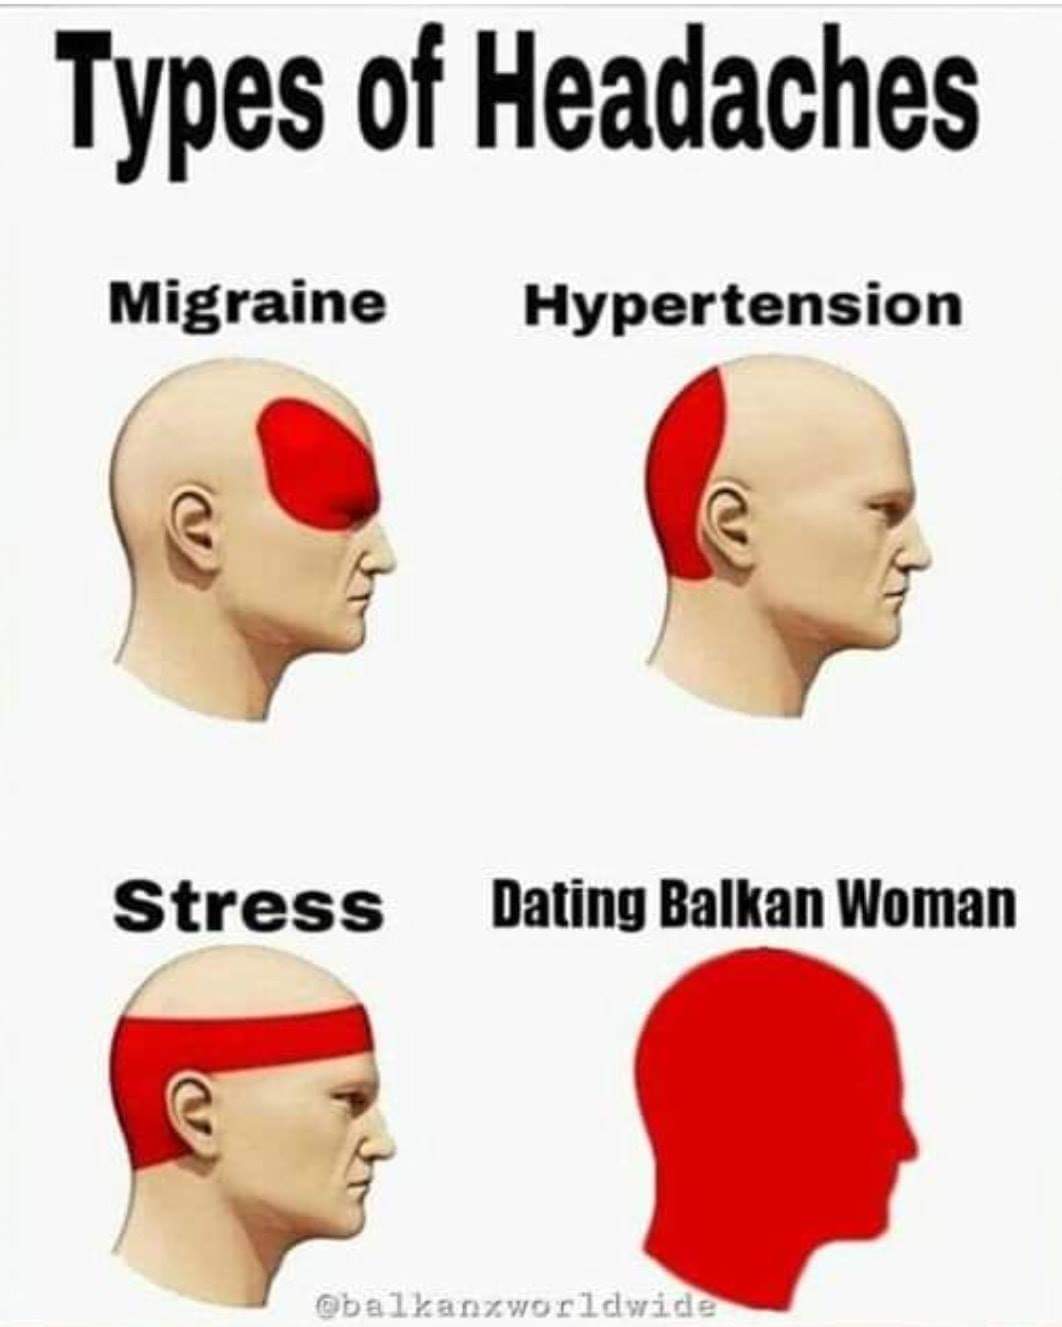 slavic meme - types of headaches meme - Types of Headaches Migraine Hypertension Stress Dating Balkan Woman